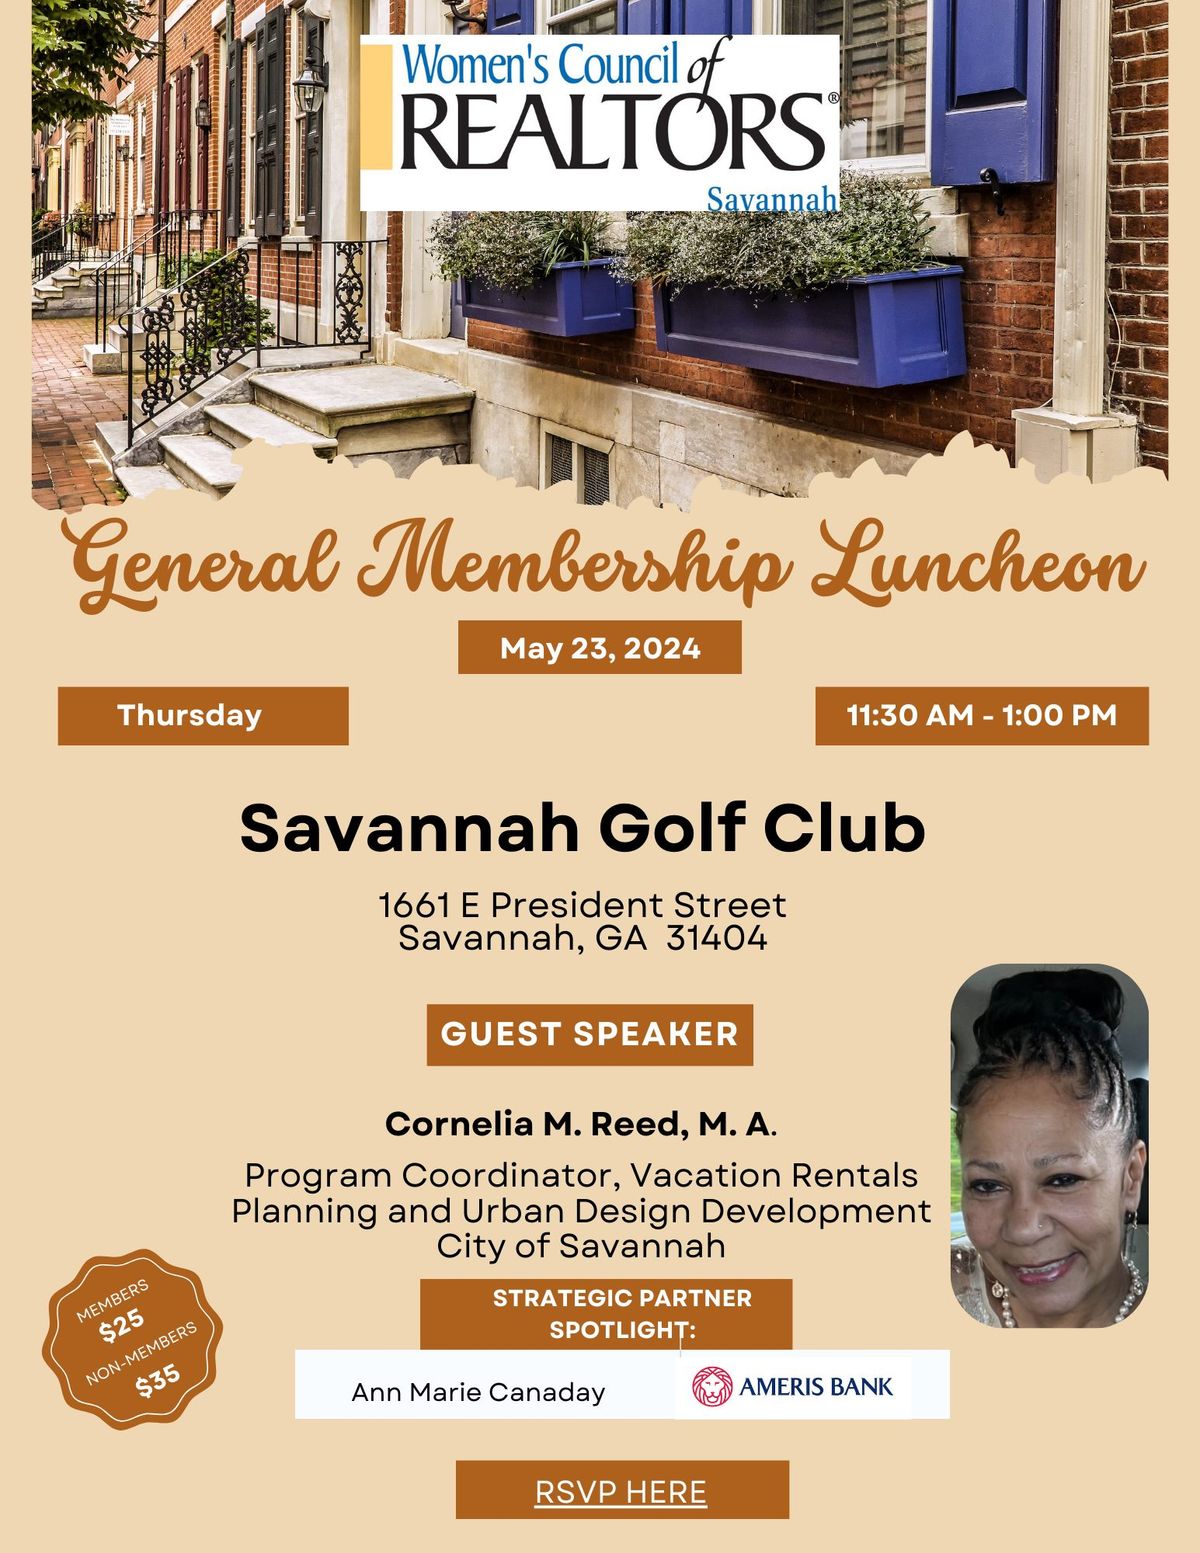 Women's Council of REALTORS Savannah - May General Membership Luncheon